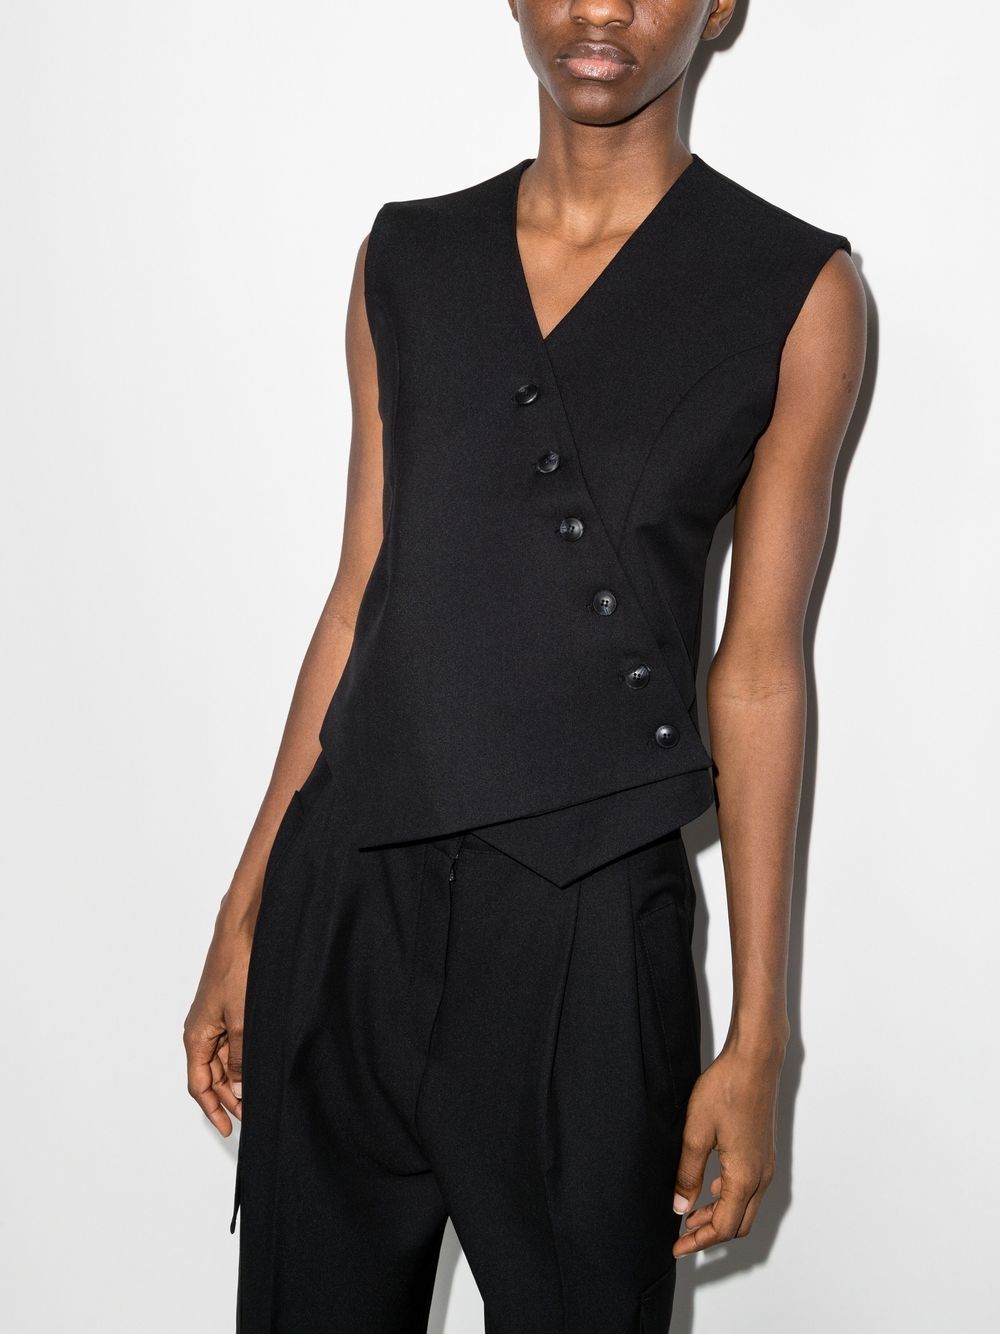 The Frankie Shop Maesa Asymmetric Vest Top - Farfetch